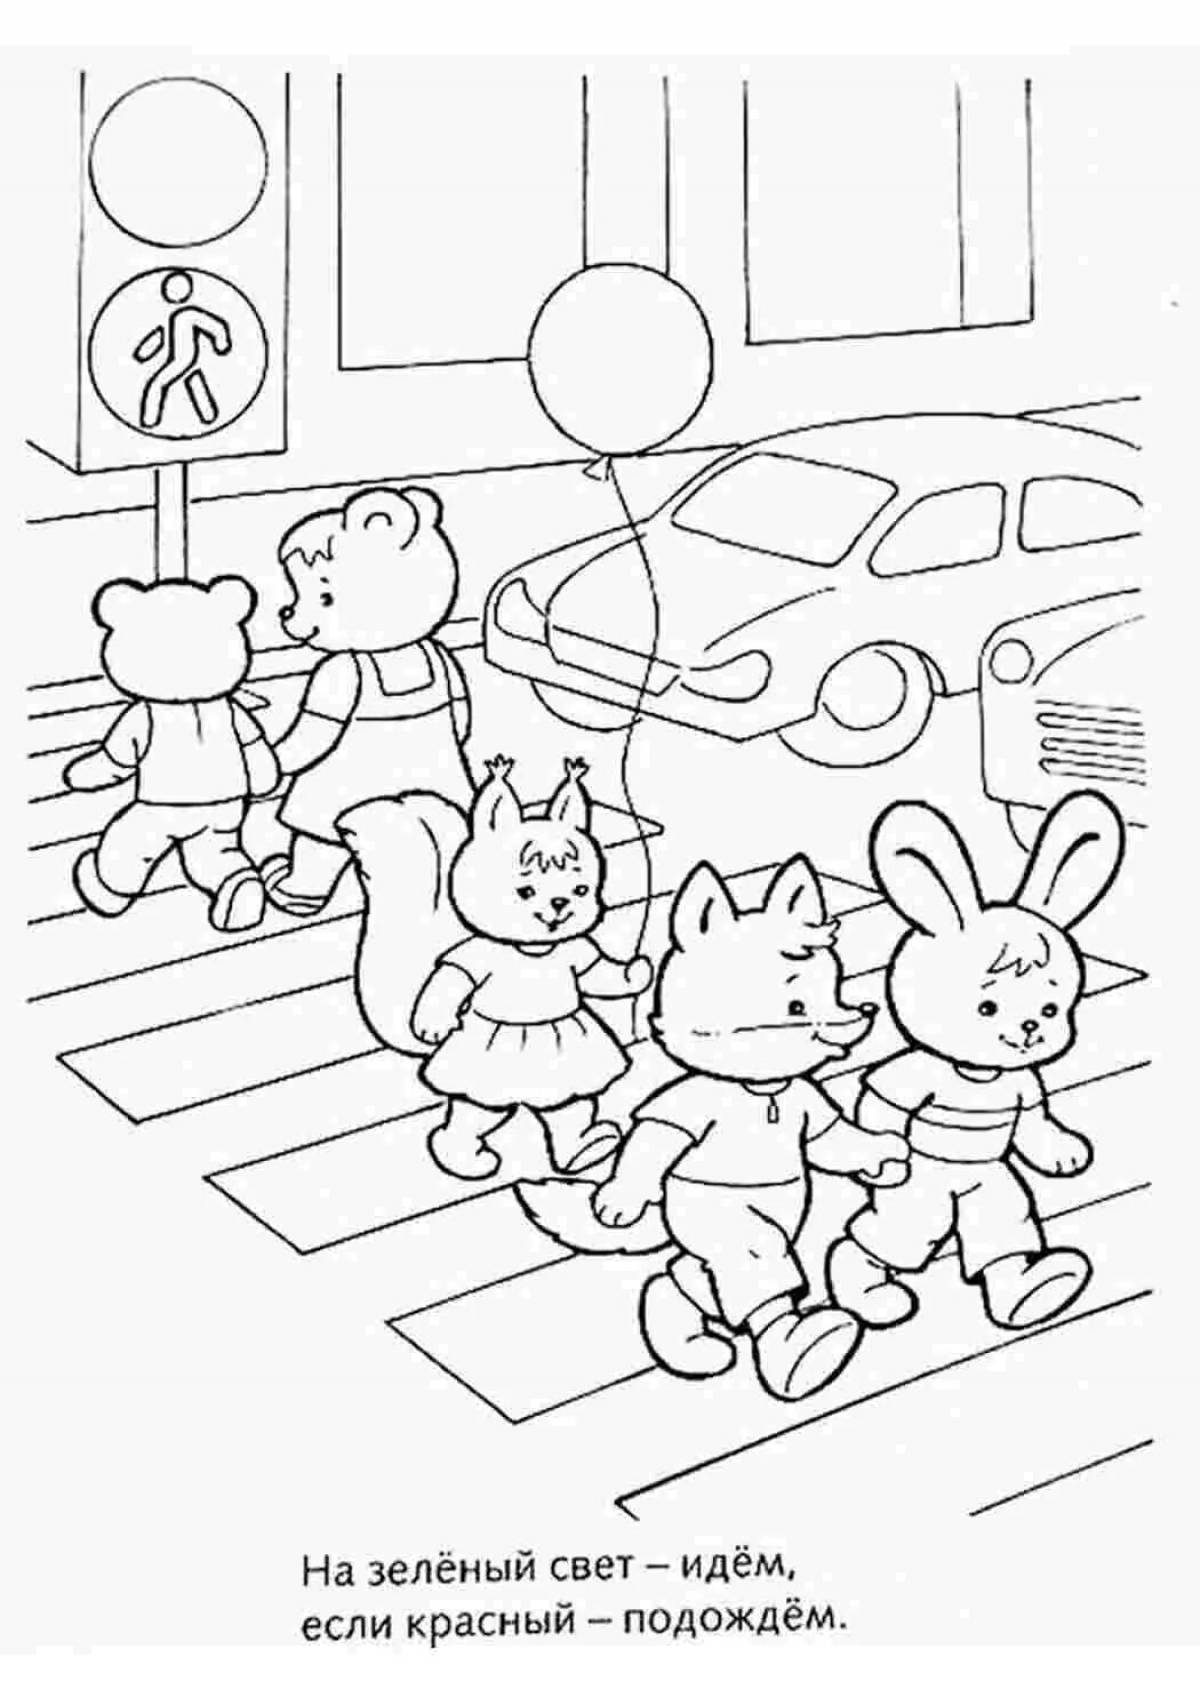 On traffic rules for preschoolers senior group #7